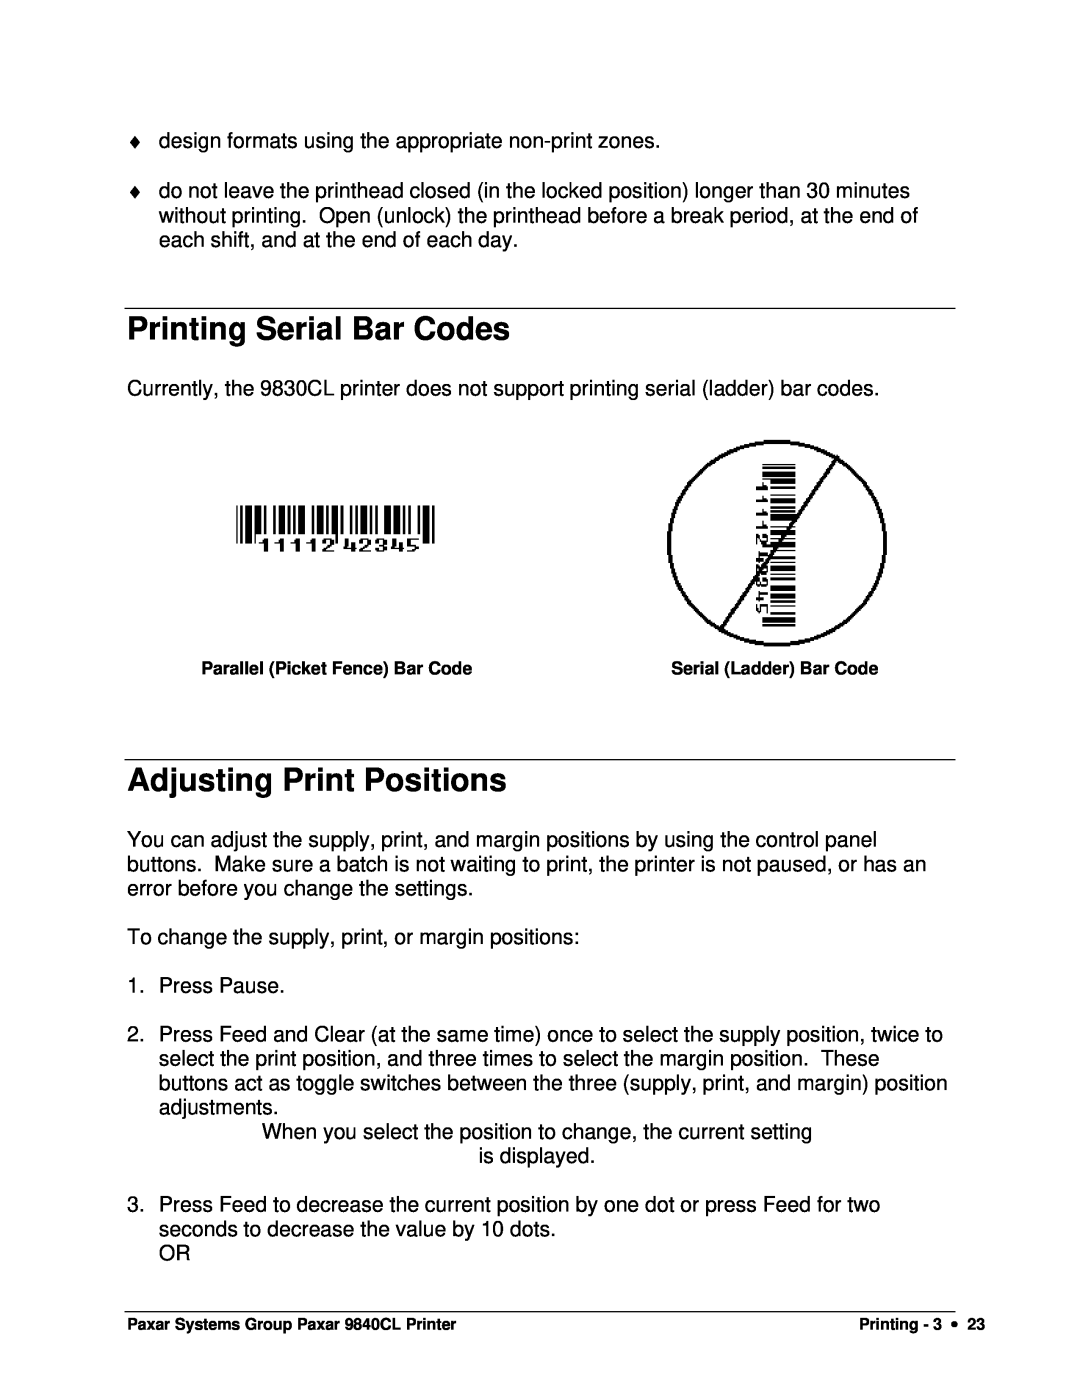 Paxar 9840CL user manual Printing Serial Bar Codes, Adjusting Print Positions 